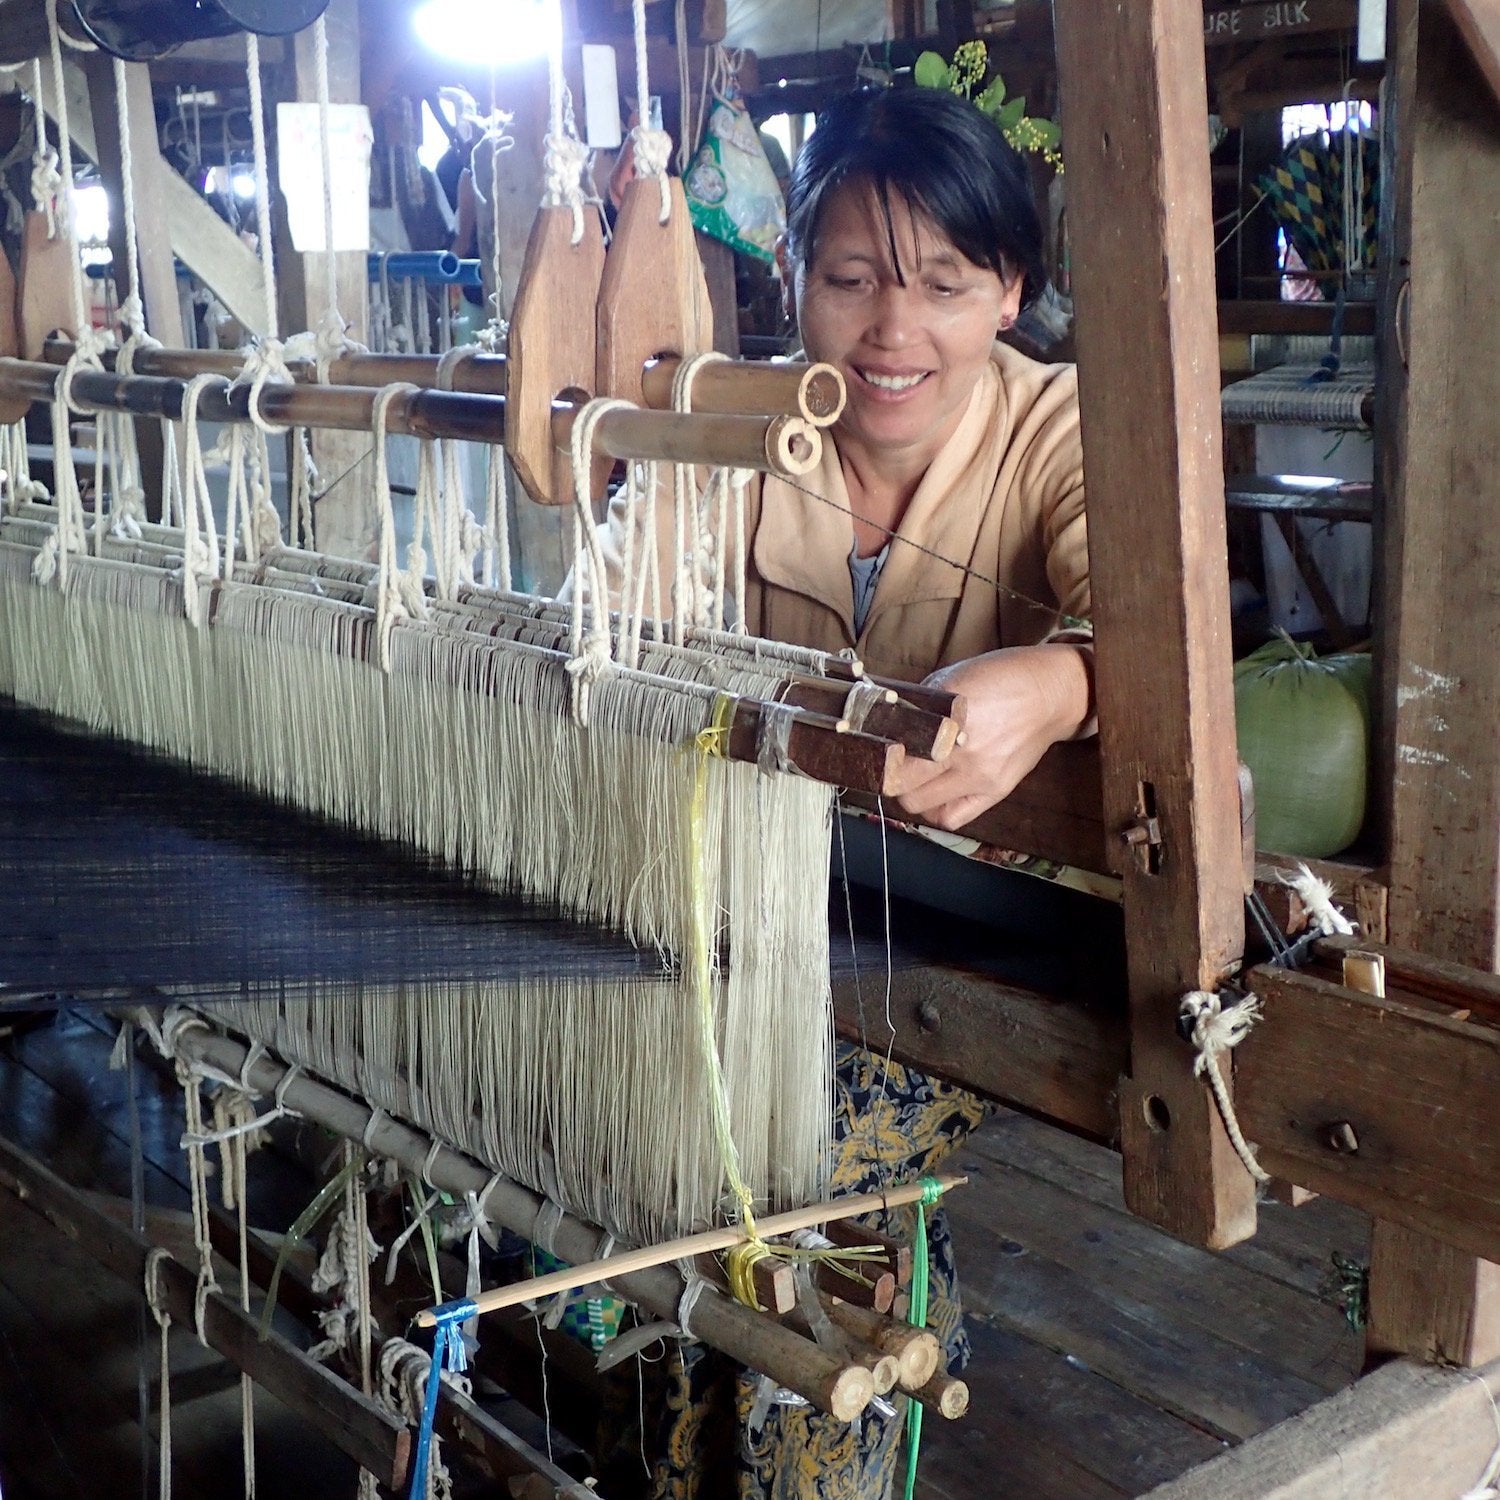 Trad. Weaving Wool Thread